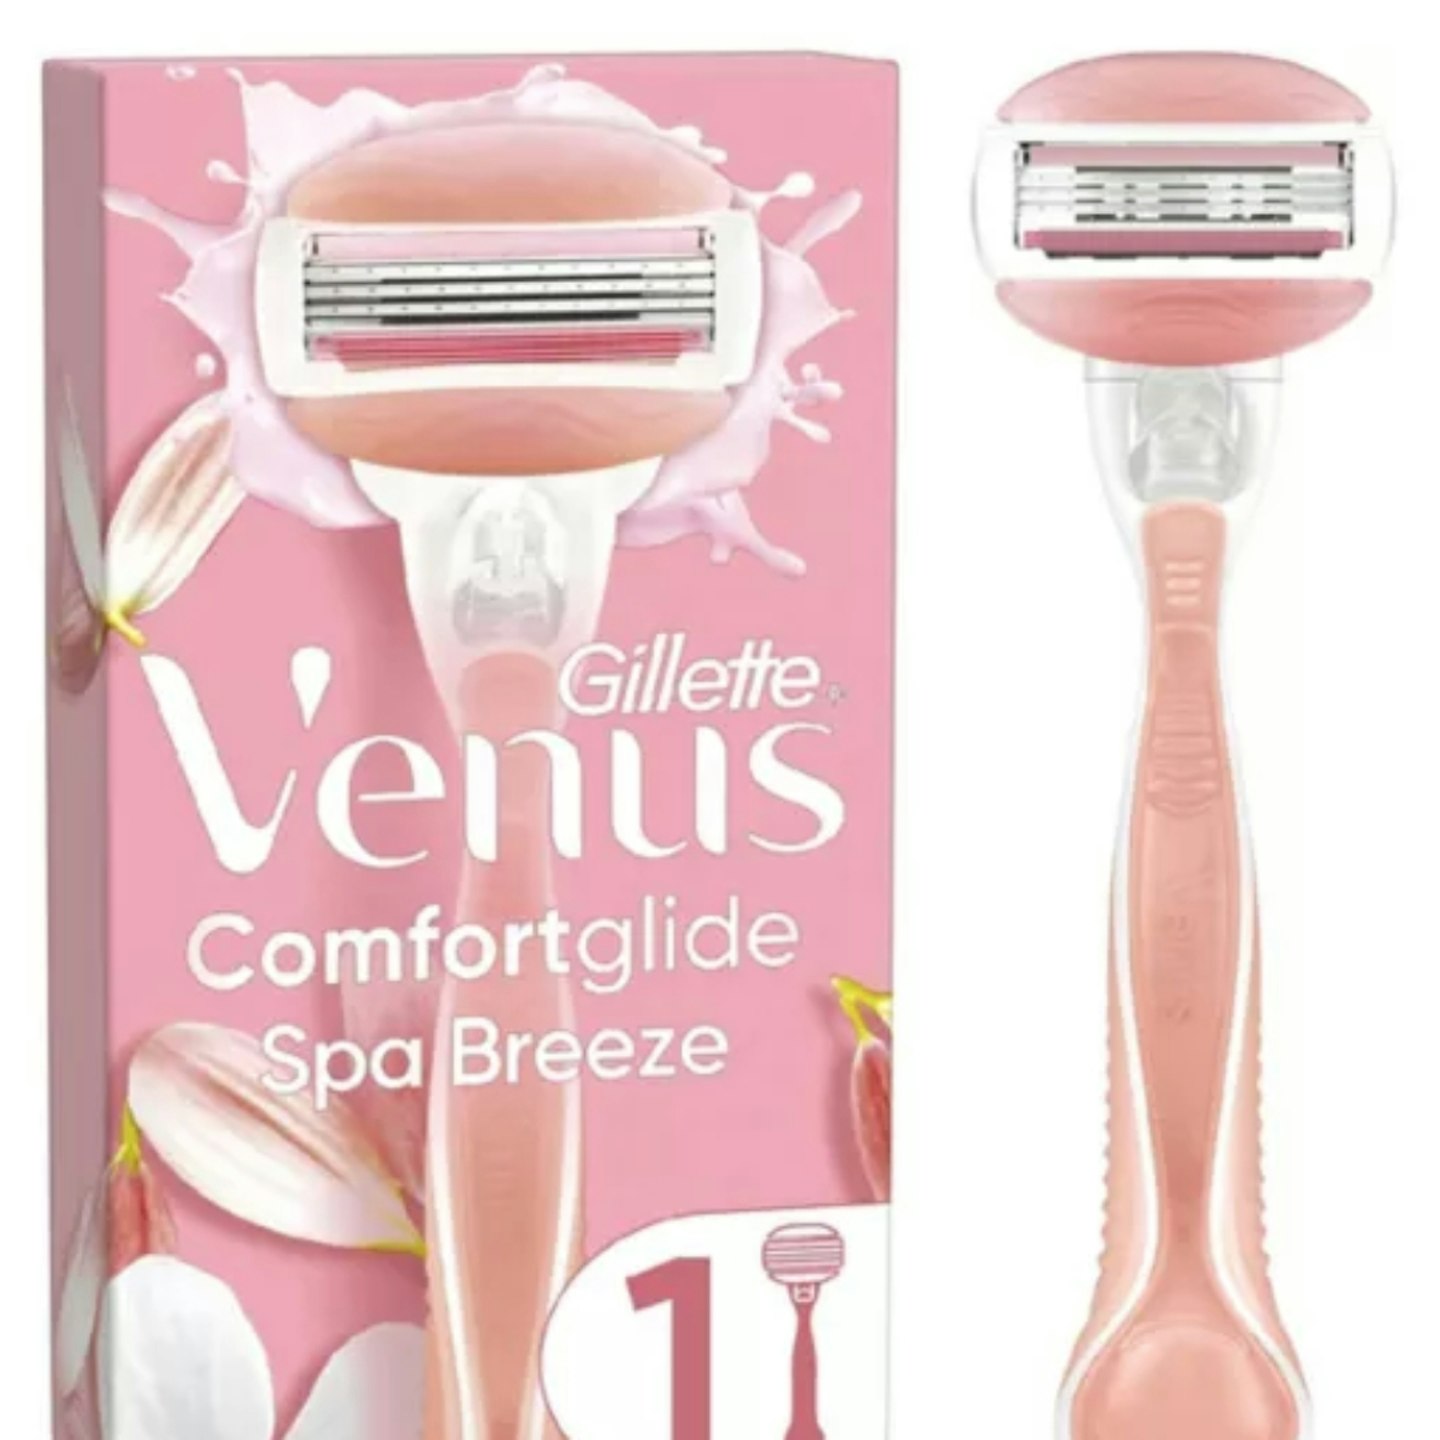 Venus Comfortglide Spa Breeze Razor